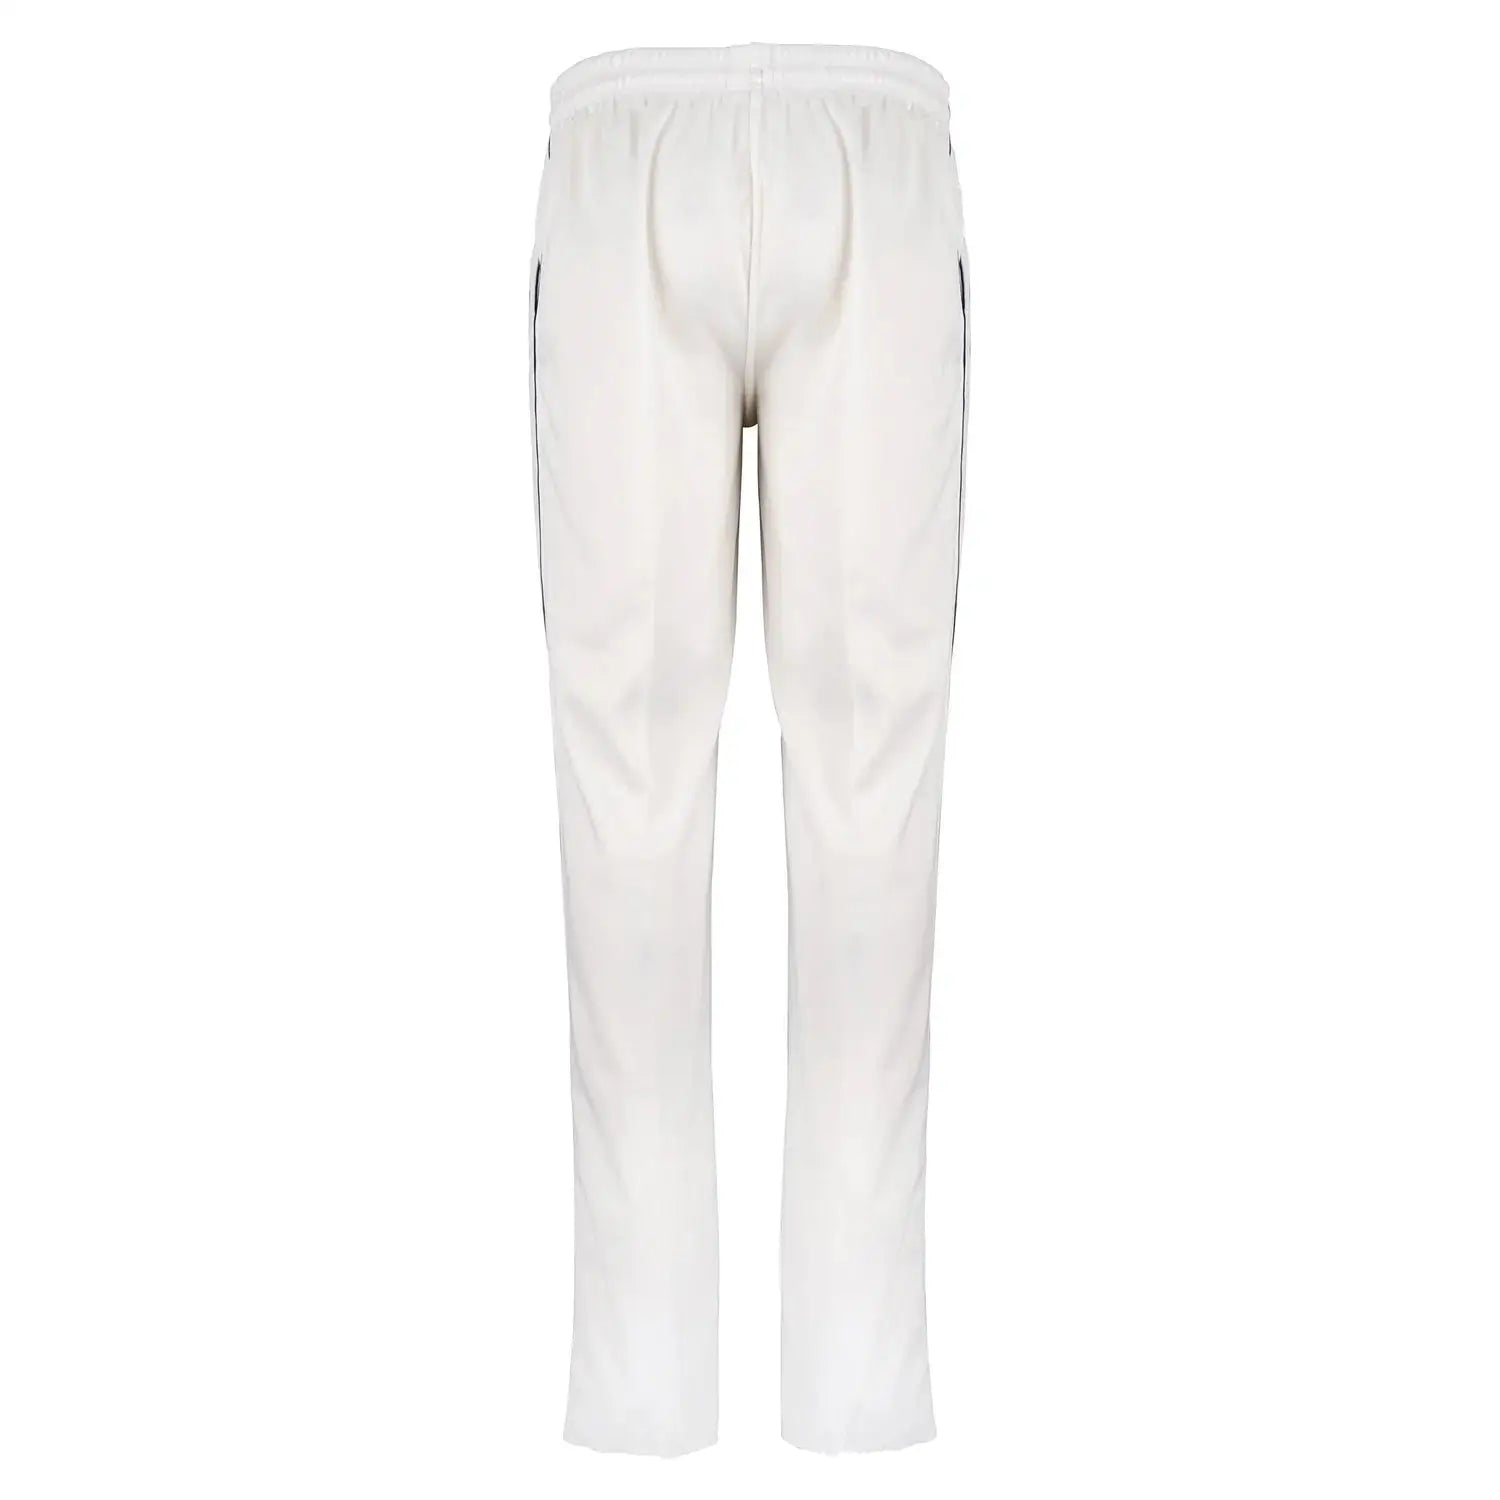 gray nicolls matrix v2 mens trousers navy trim clothing pants cricket best buy 229